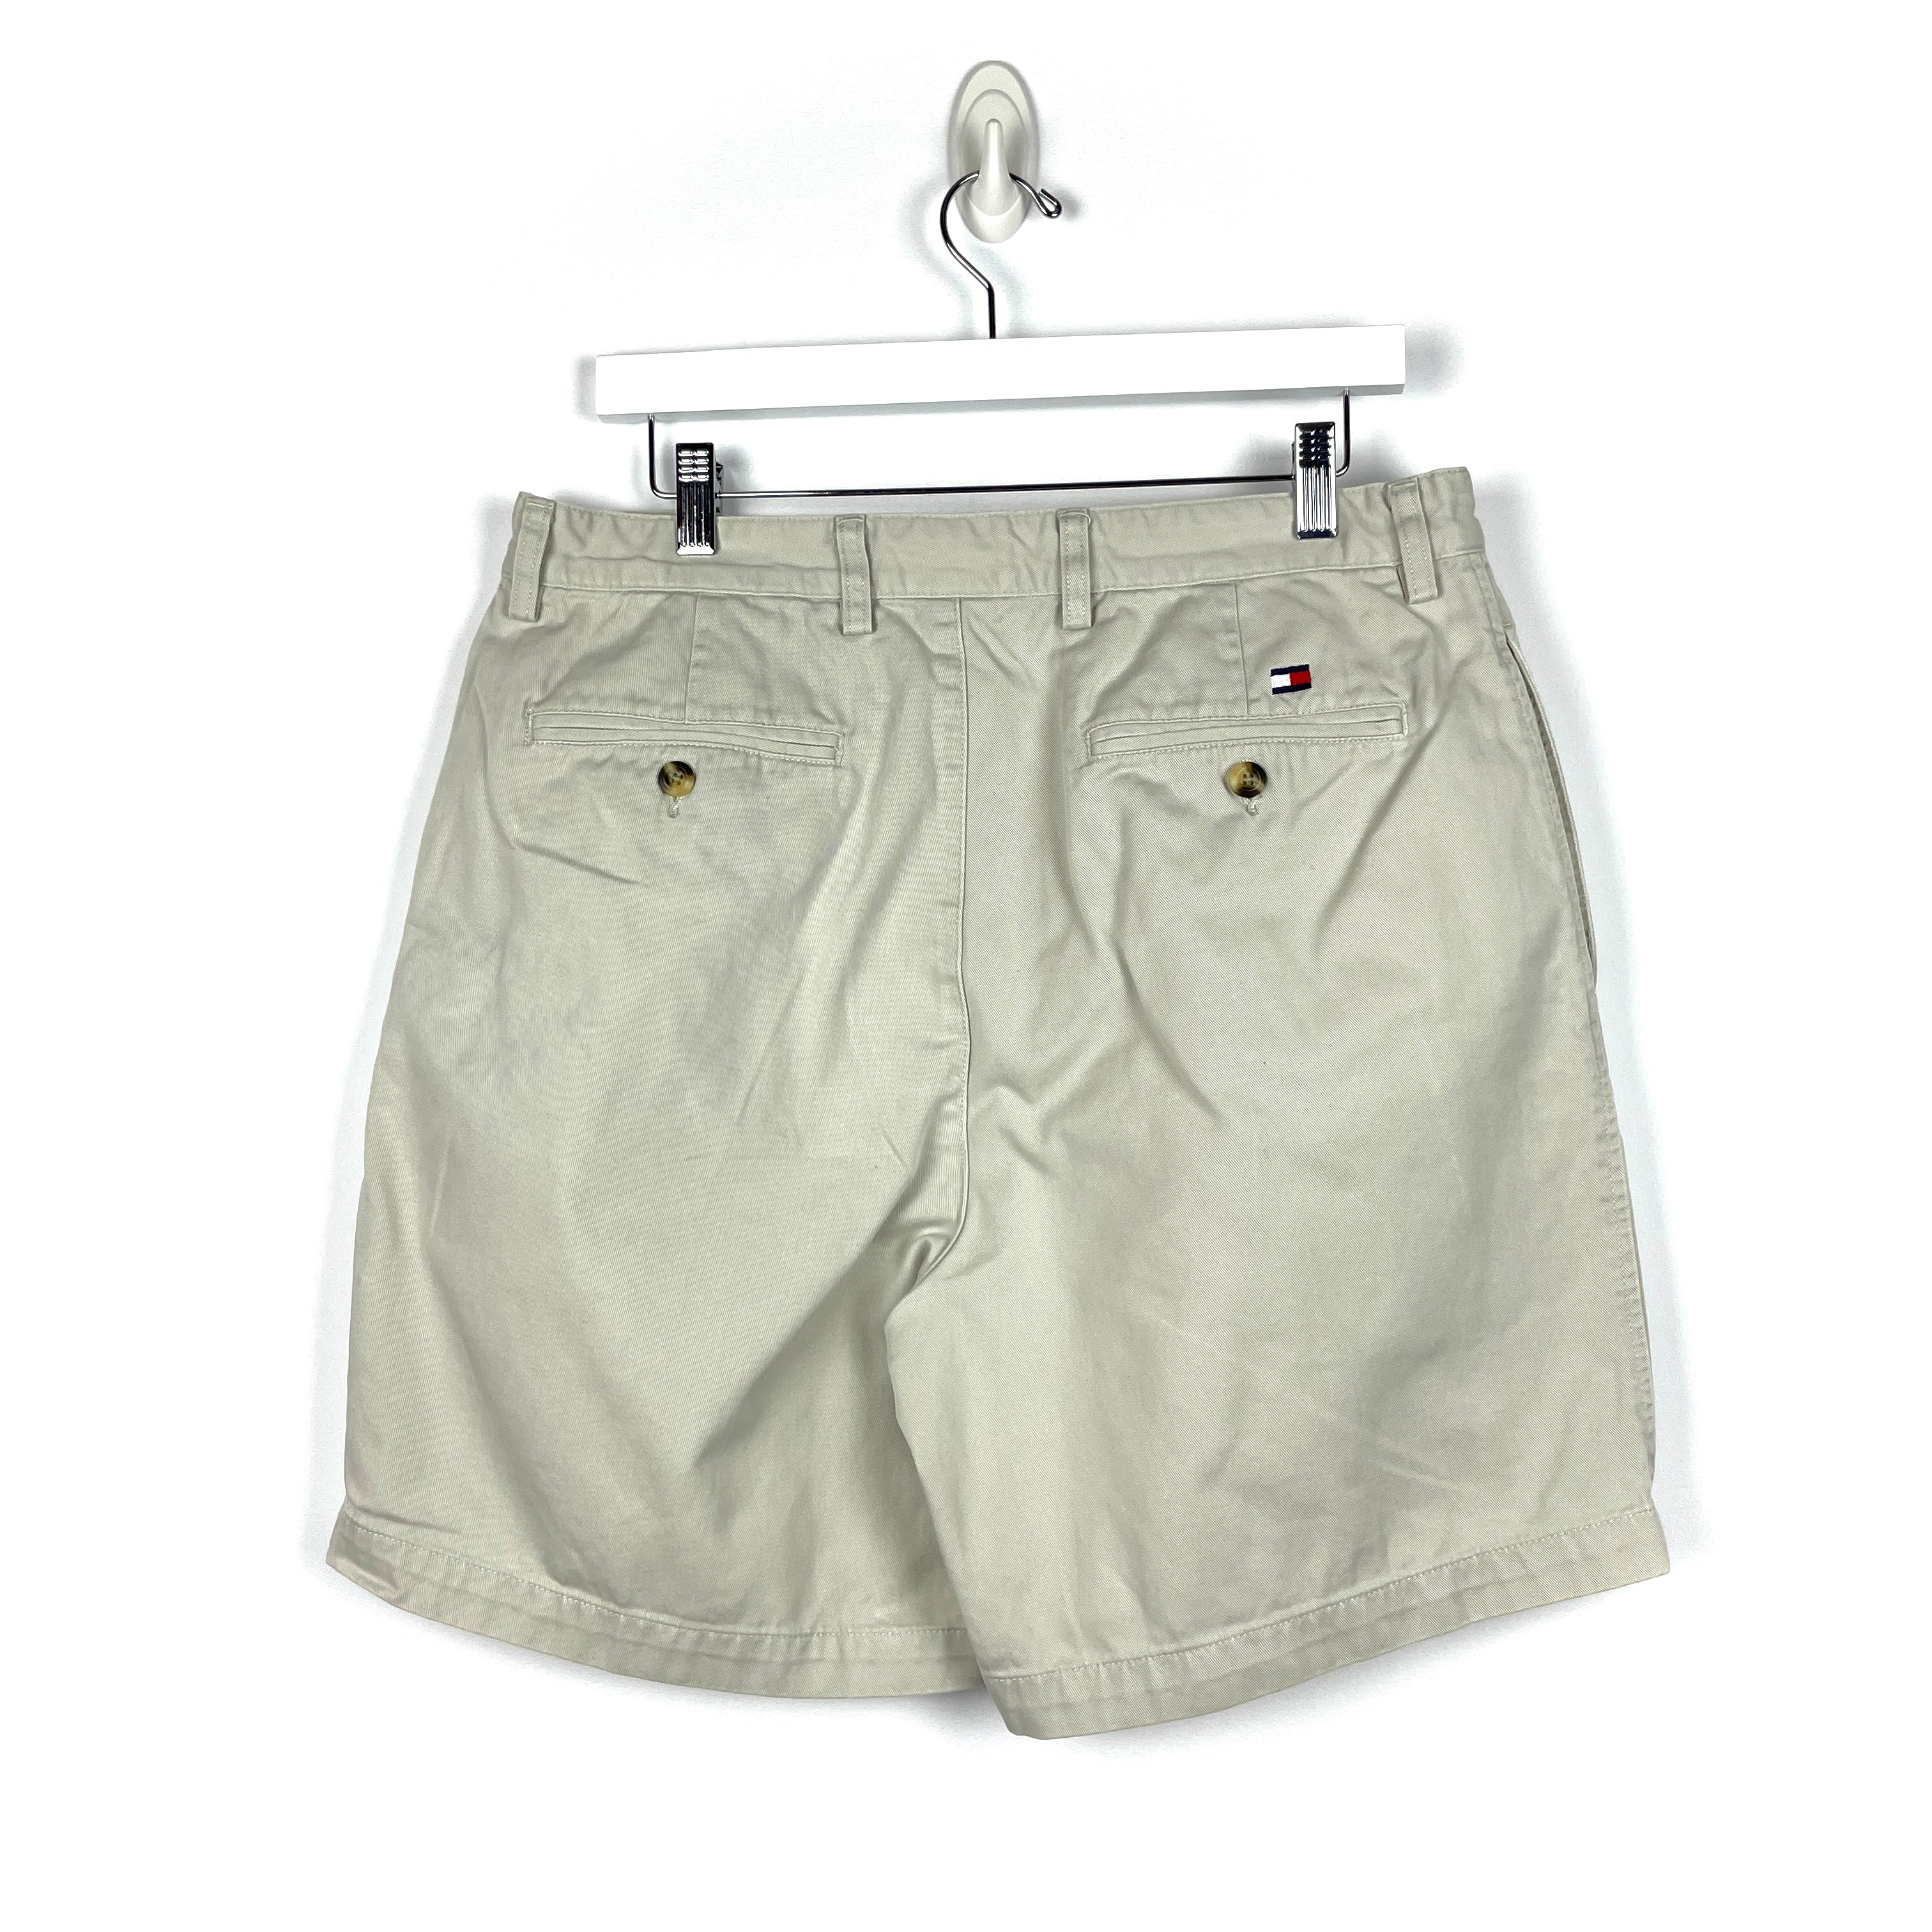 Vintage Tommy Hilfiger Chino Shorts - Men's 34